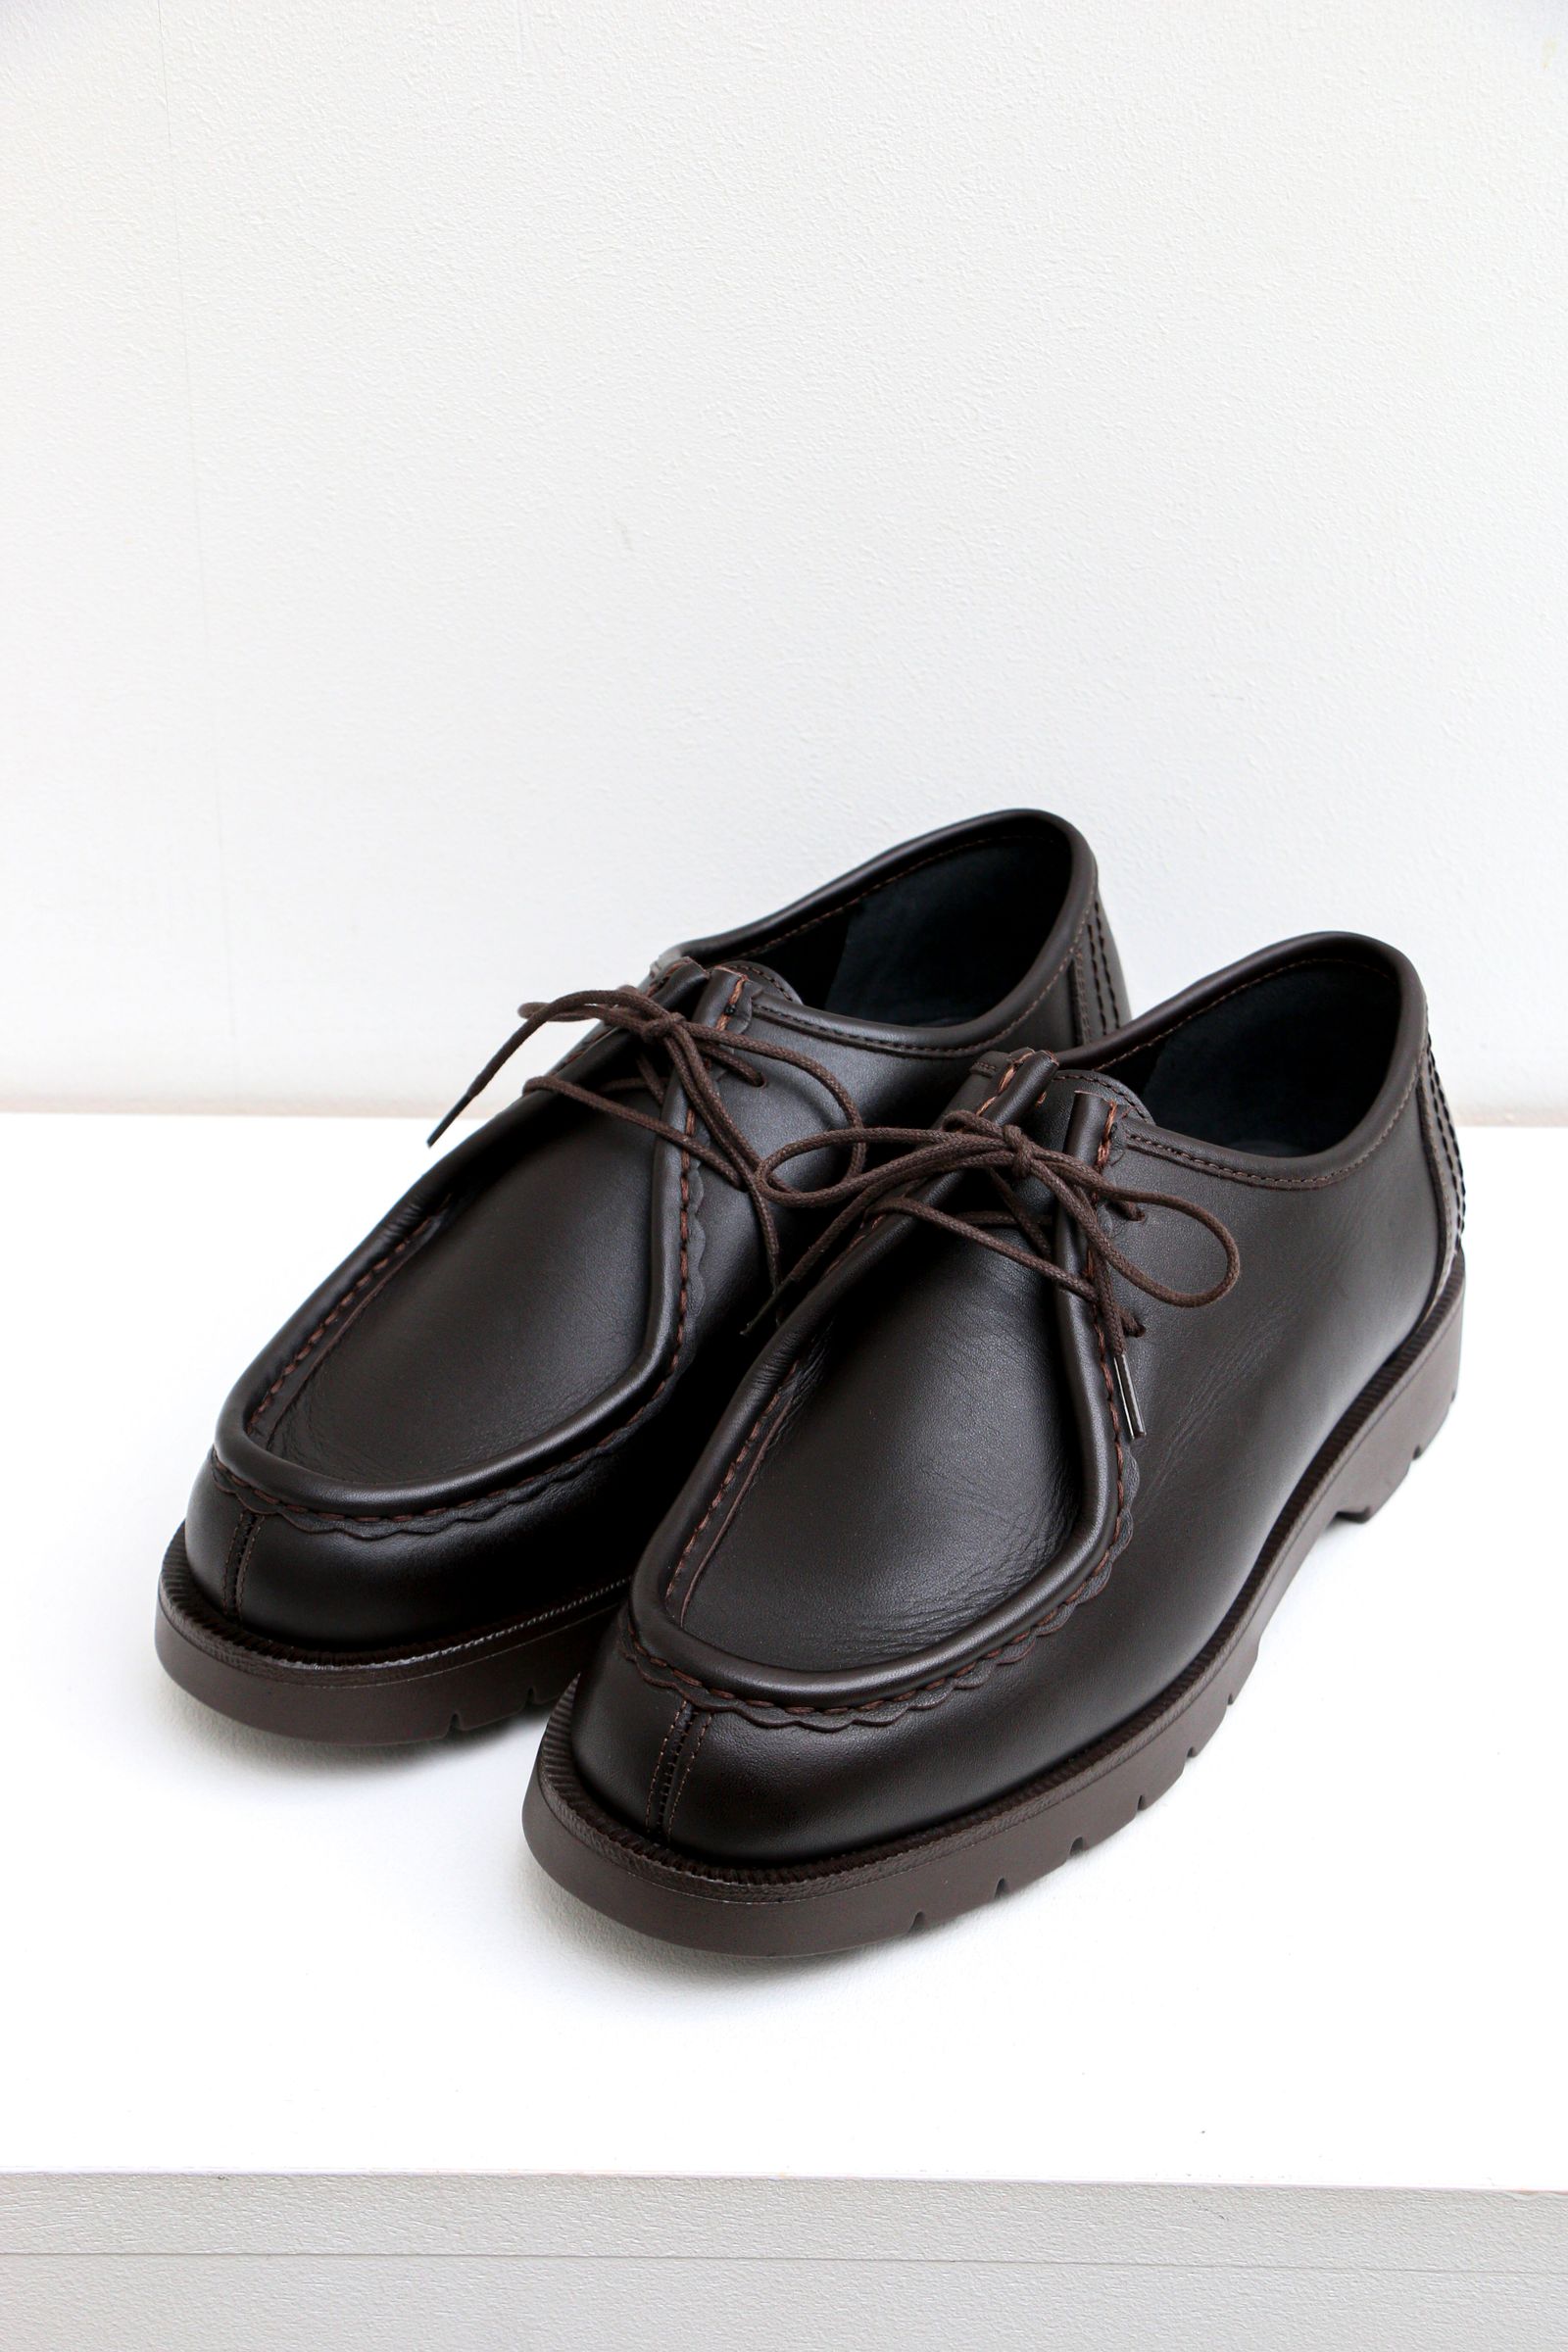 KLEMAN - KLEMAN PADROR Black / 革靴 / チロリアンシューズ / メンズ 